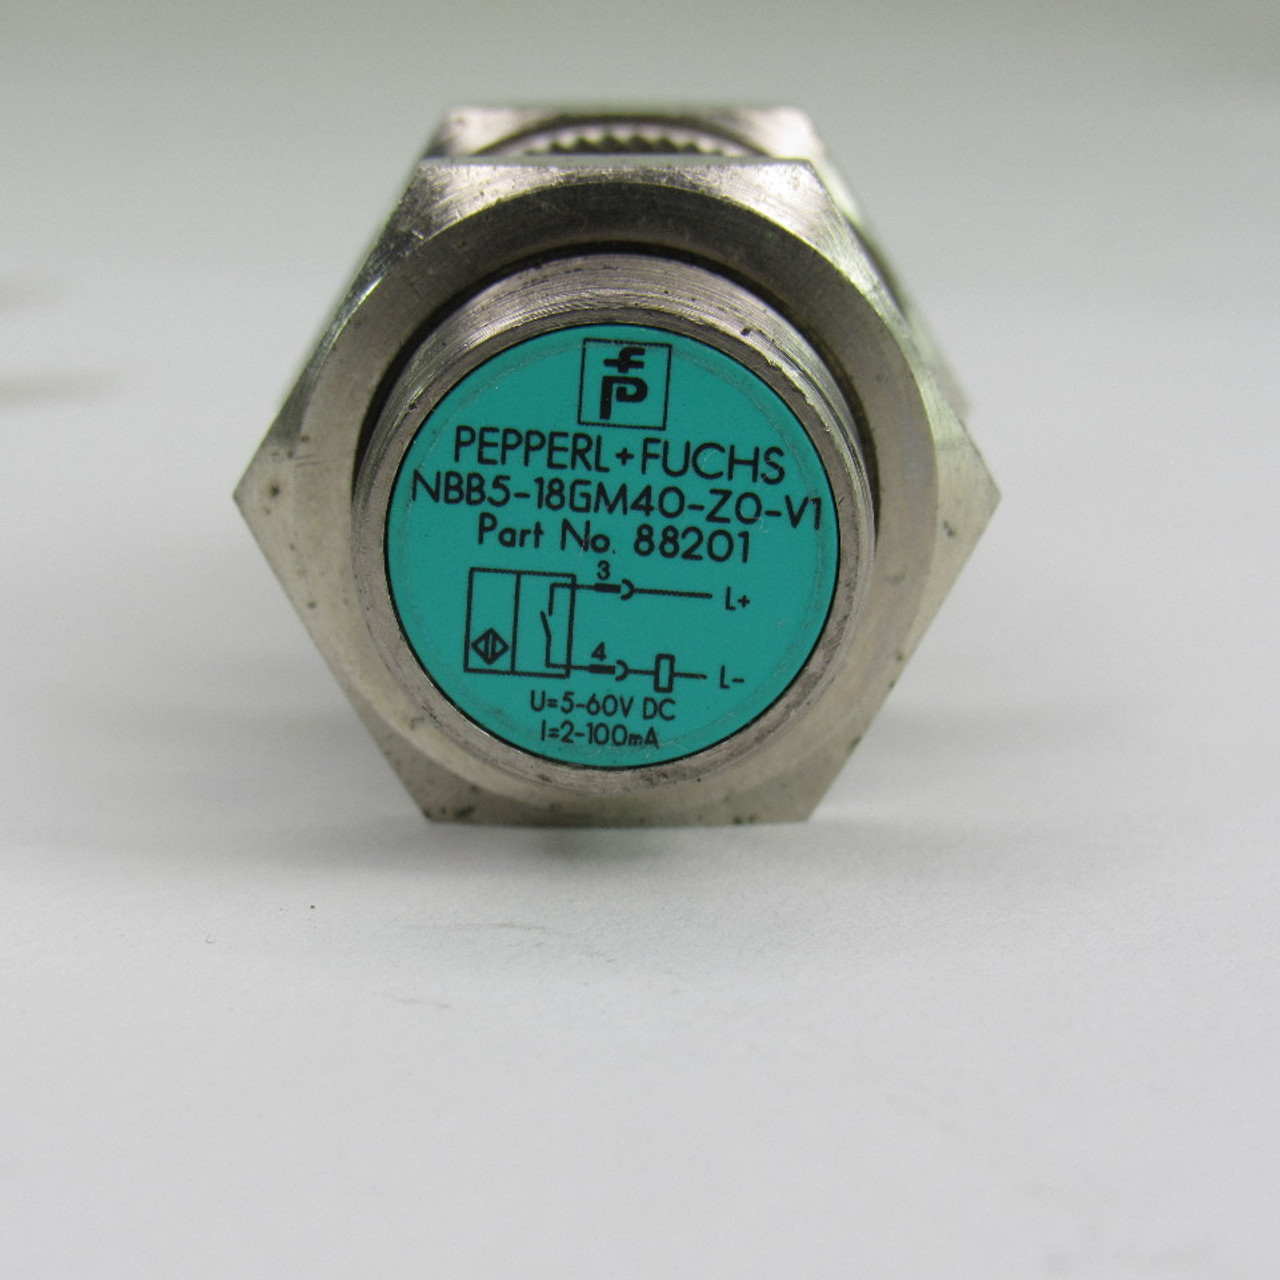 Pepperl+Fuchs NBB5-18GM40-Z0-V1 Inductive Proximity Sensor, 5-60V DC, 100mA